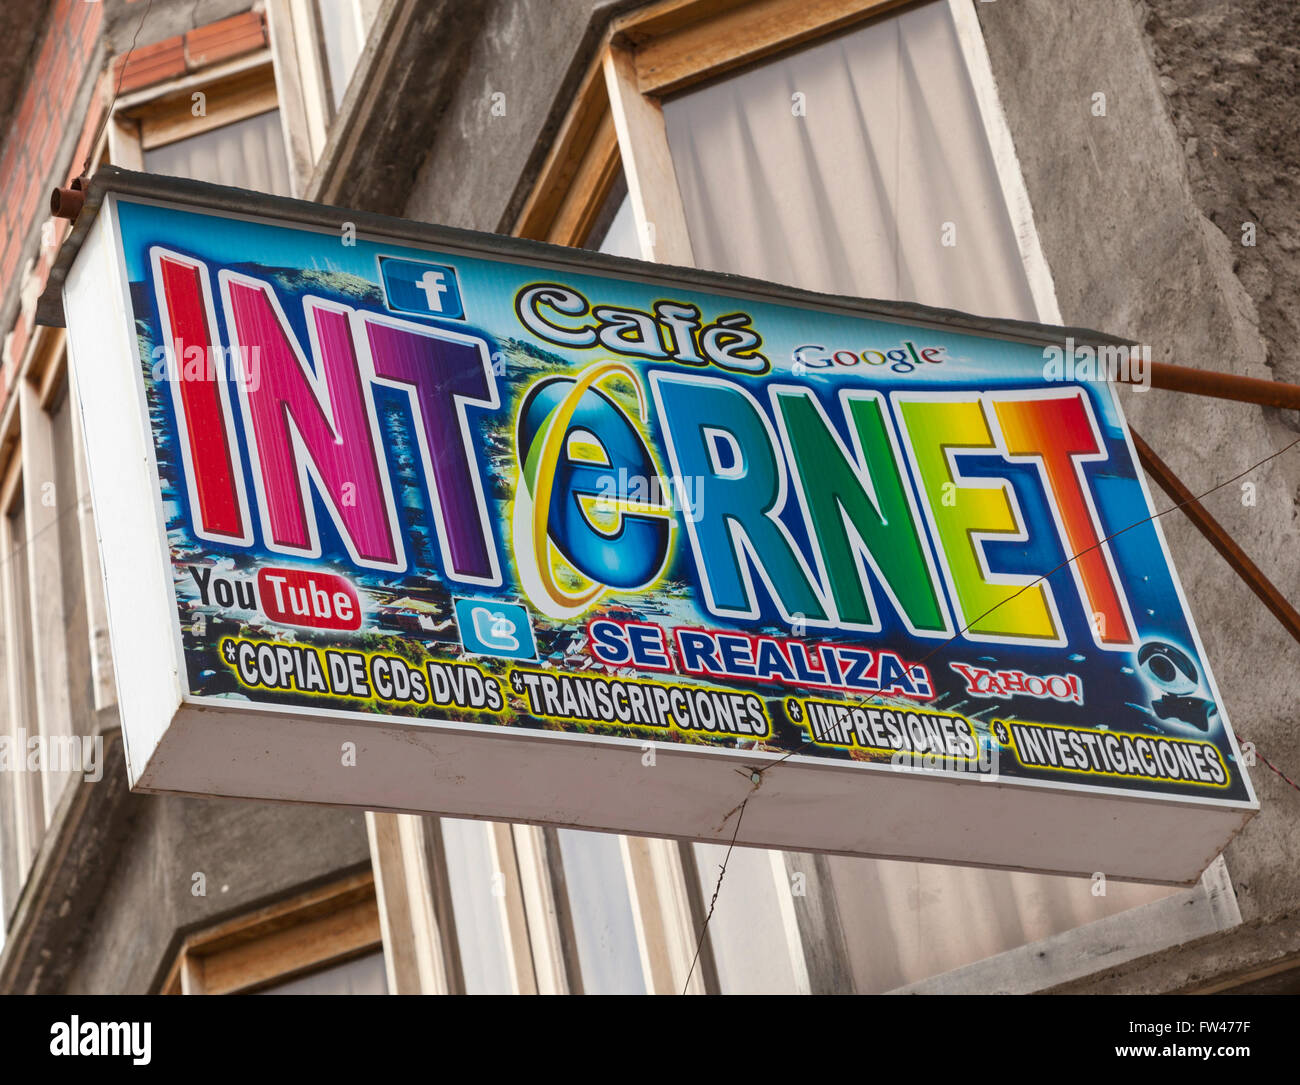 Internet cafe Stock Photo